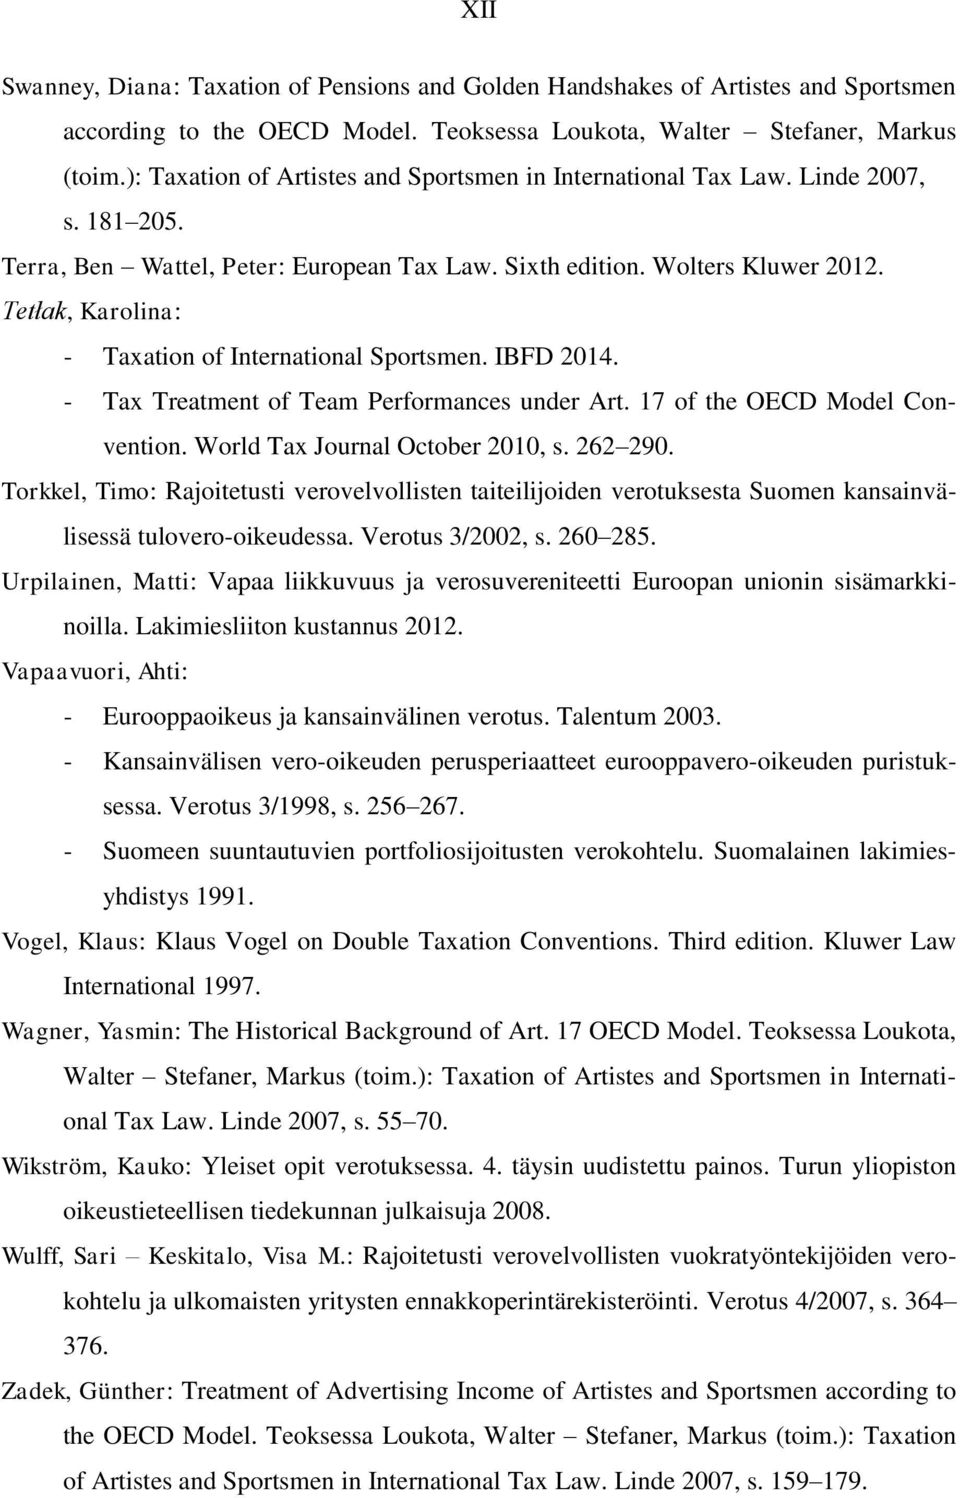 Tetłak, Karolina: - Taxation of International Sportsmen. IBFD 2014. - Tax Treatment of Team Performances under Art. 17 of the OECD Model Convention. World Tax Journal October 2010, s. 262 290.